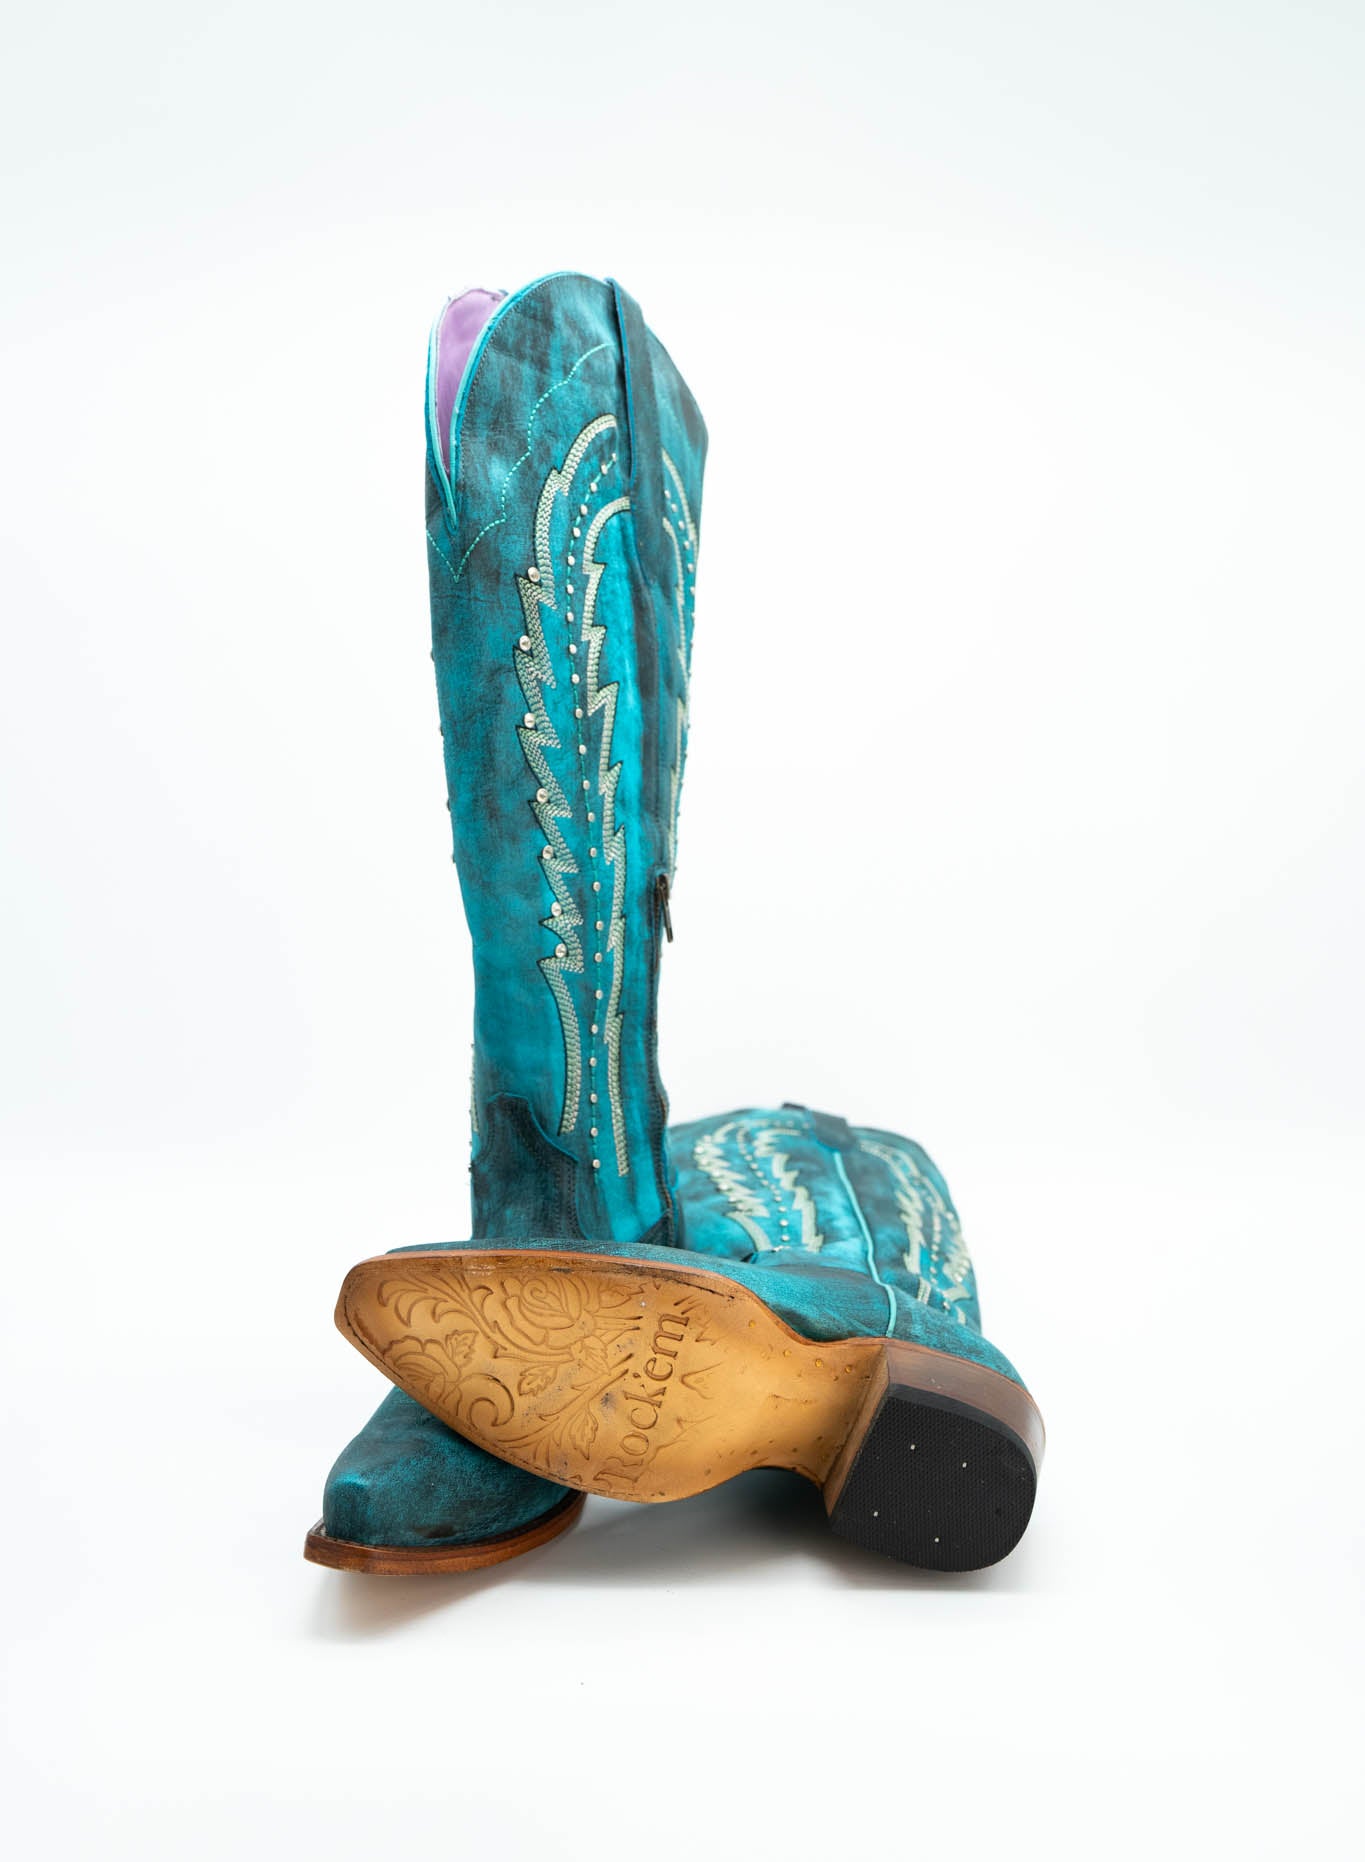 Est. Carolina Monett Turquia Tall Wide Calf Friendly Cowgirl Boot